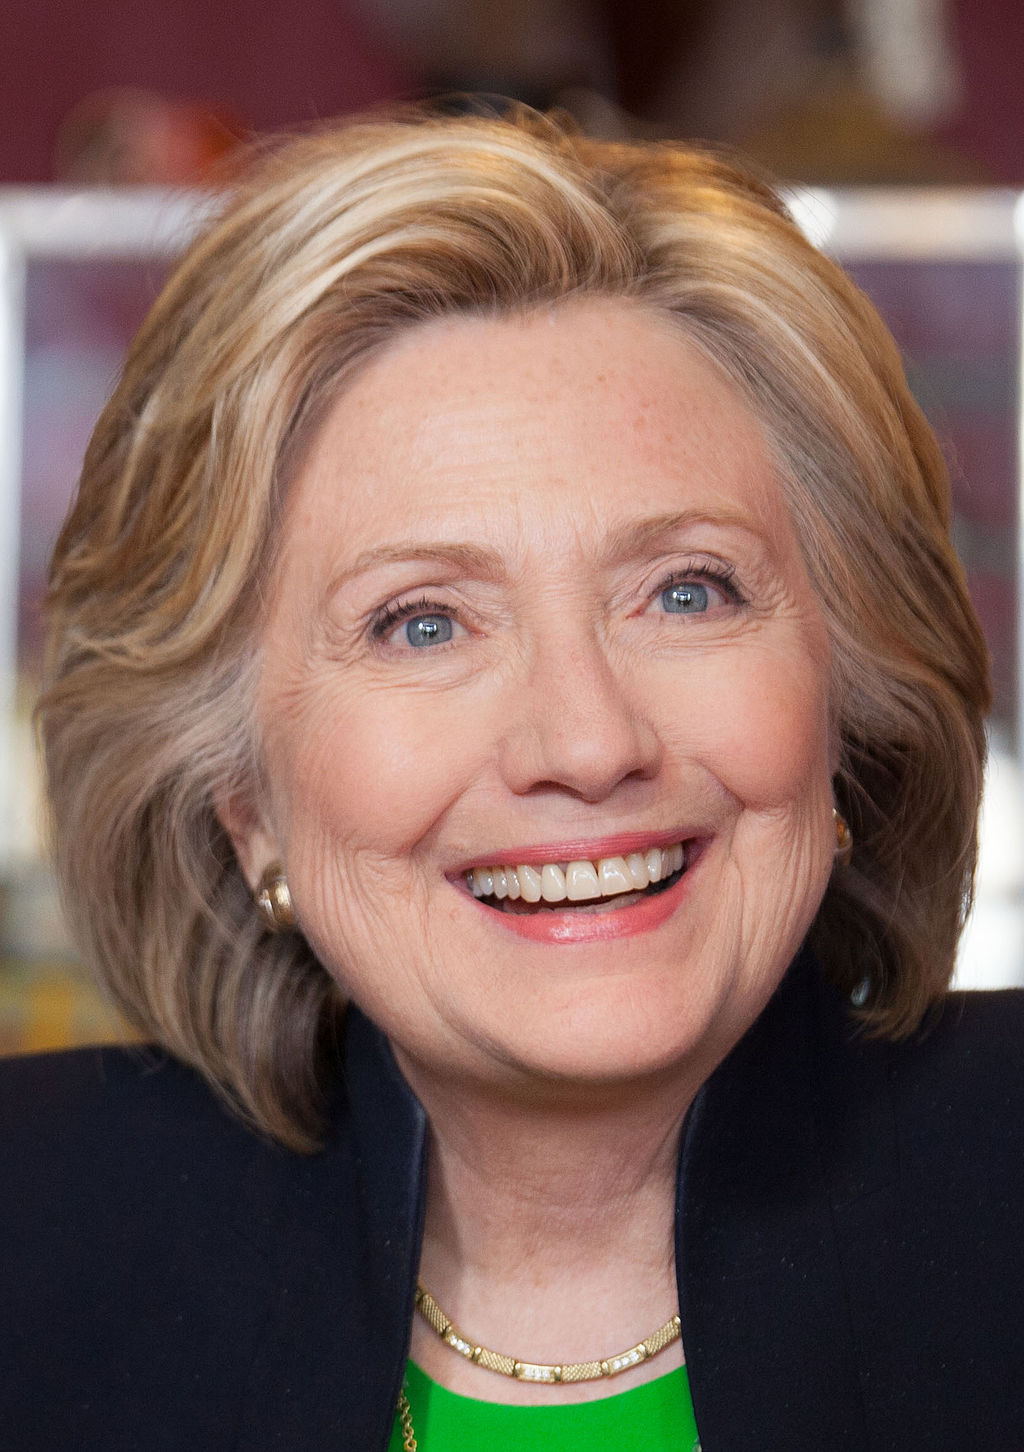 ‘Post-menopausale Hillary Clinton geen gevaar voor emotionele nucleaire